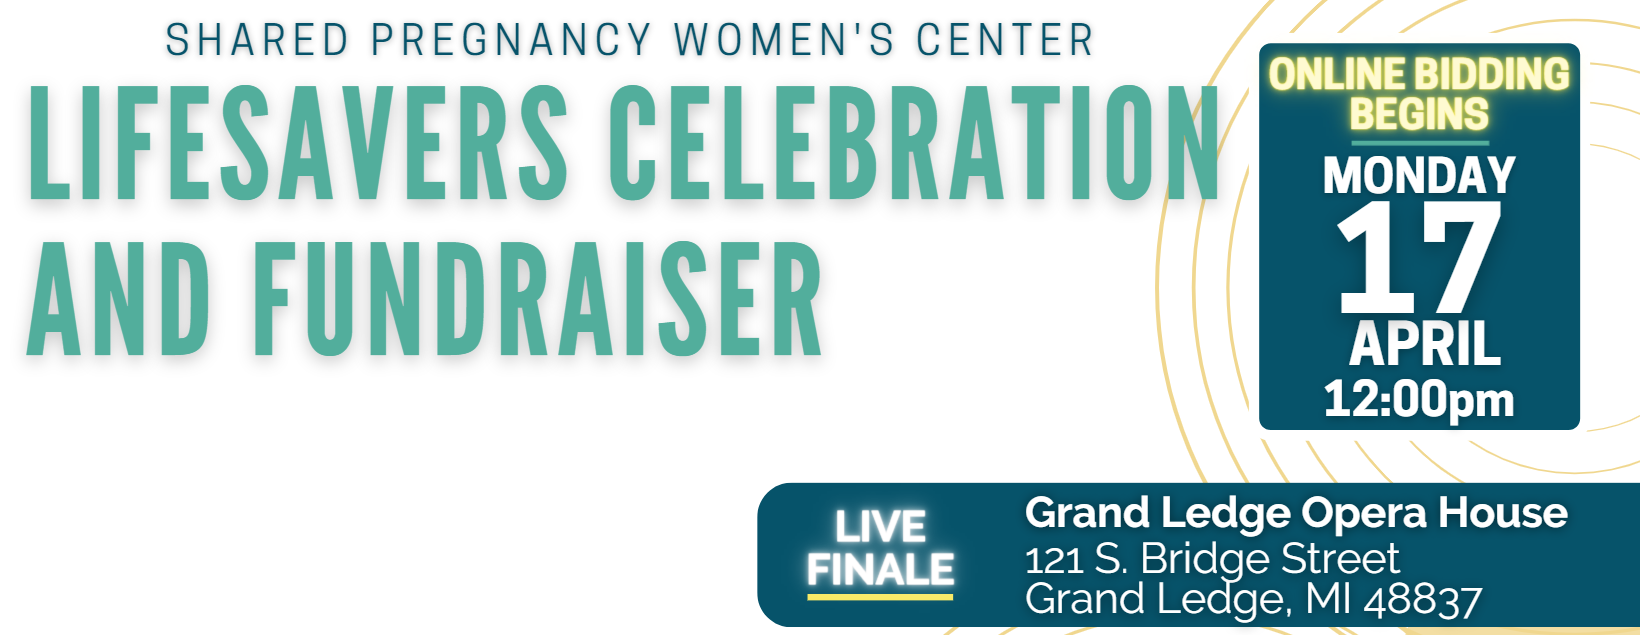 Shared Pregnancy Women's Center  Lifesavers Celebration and Fundraiser